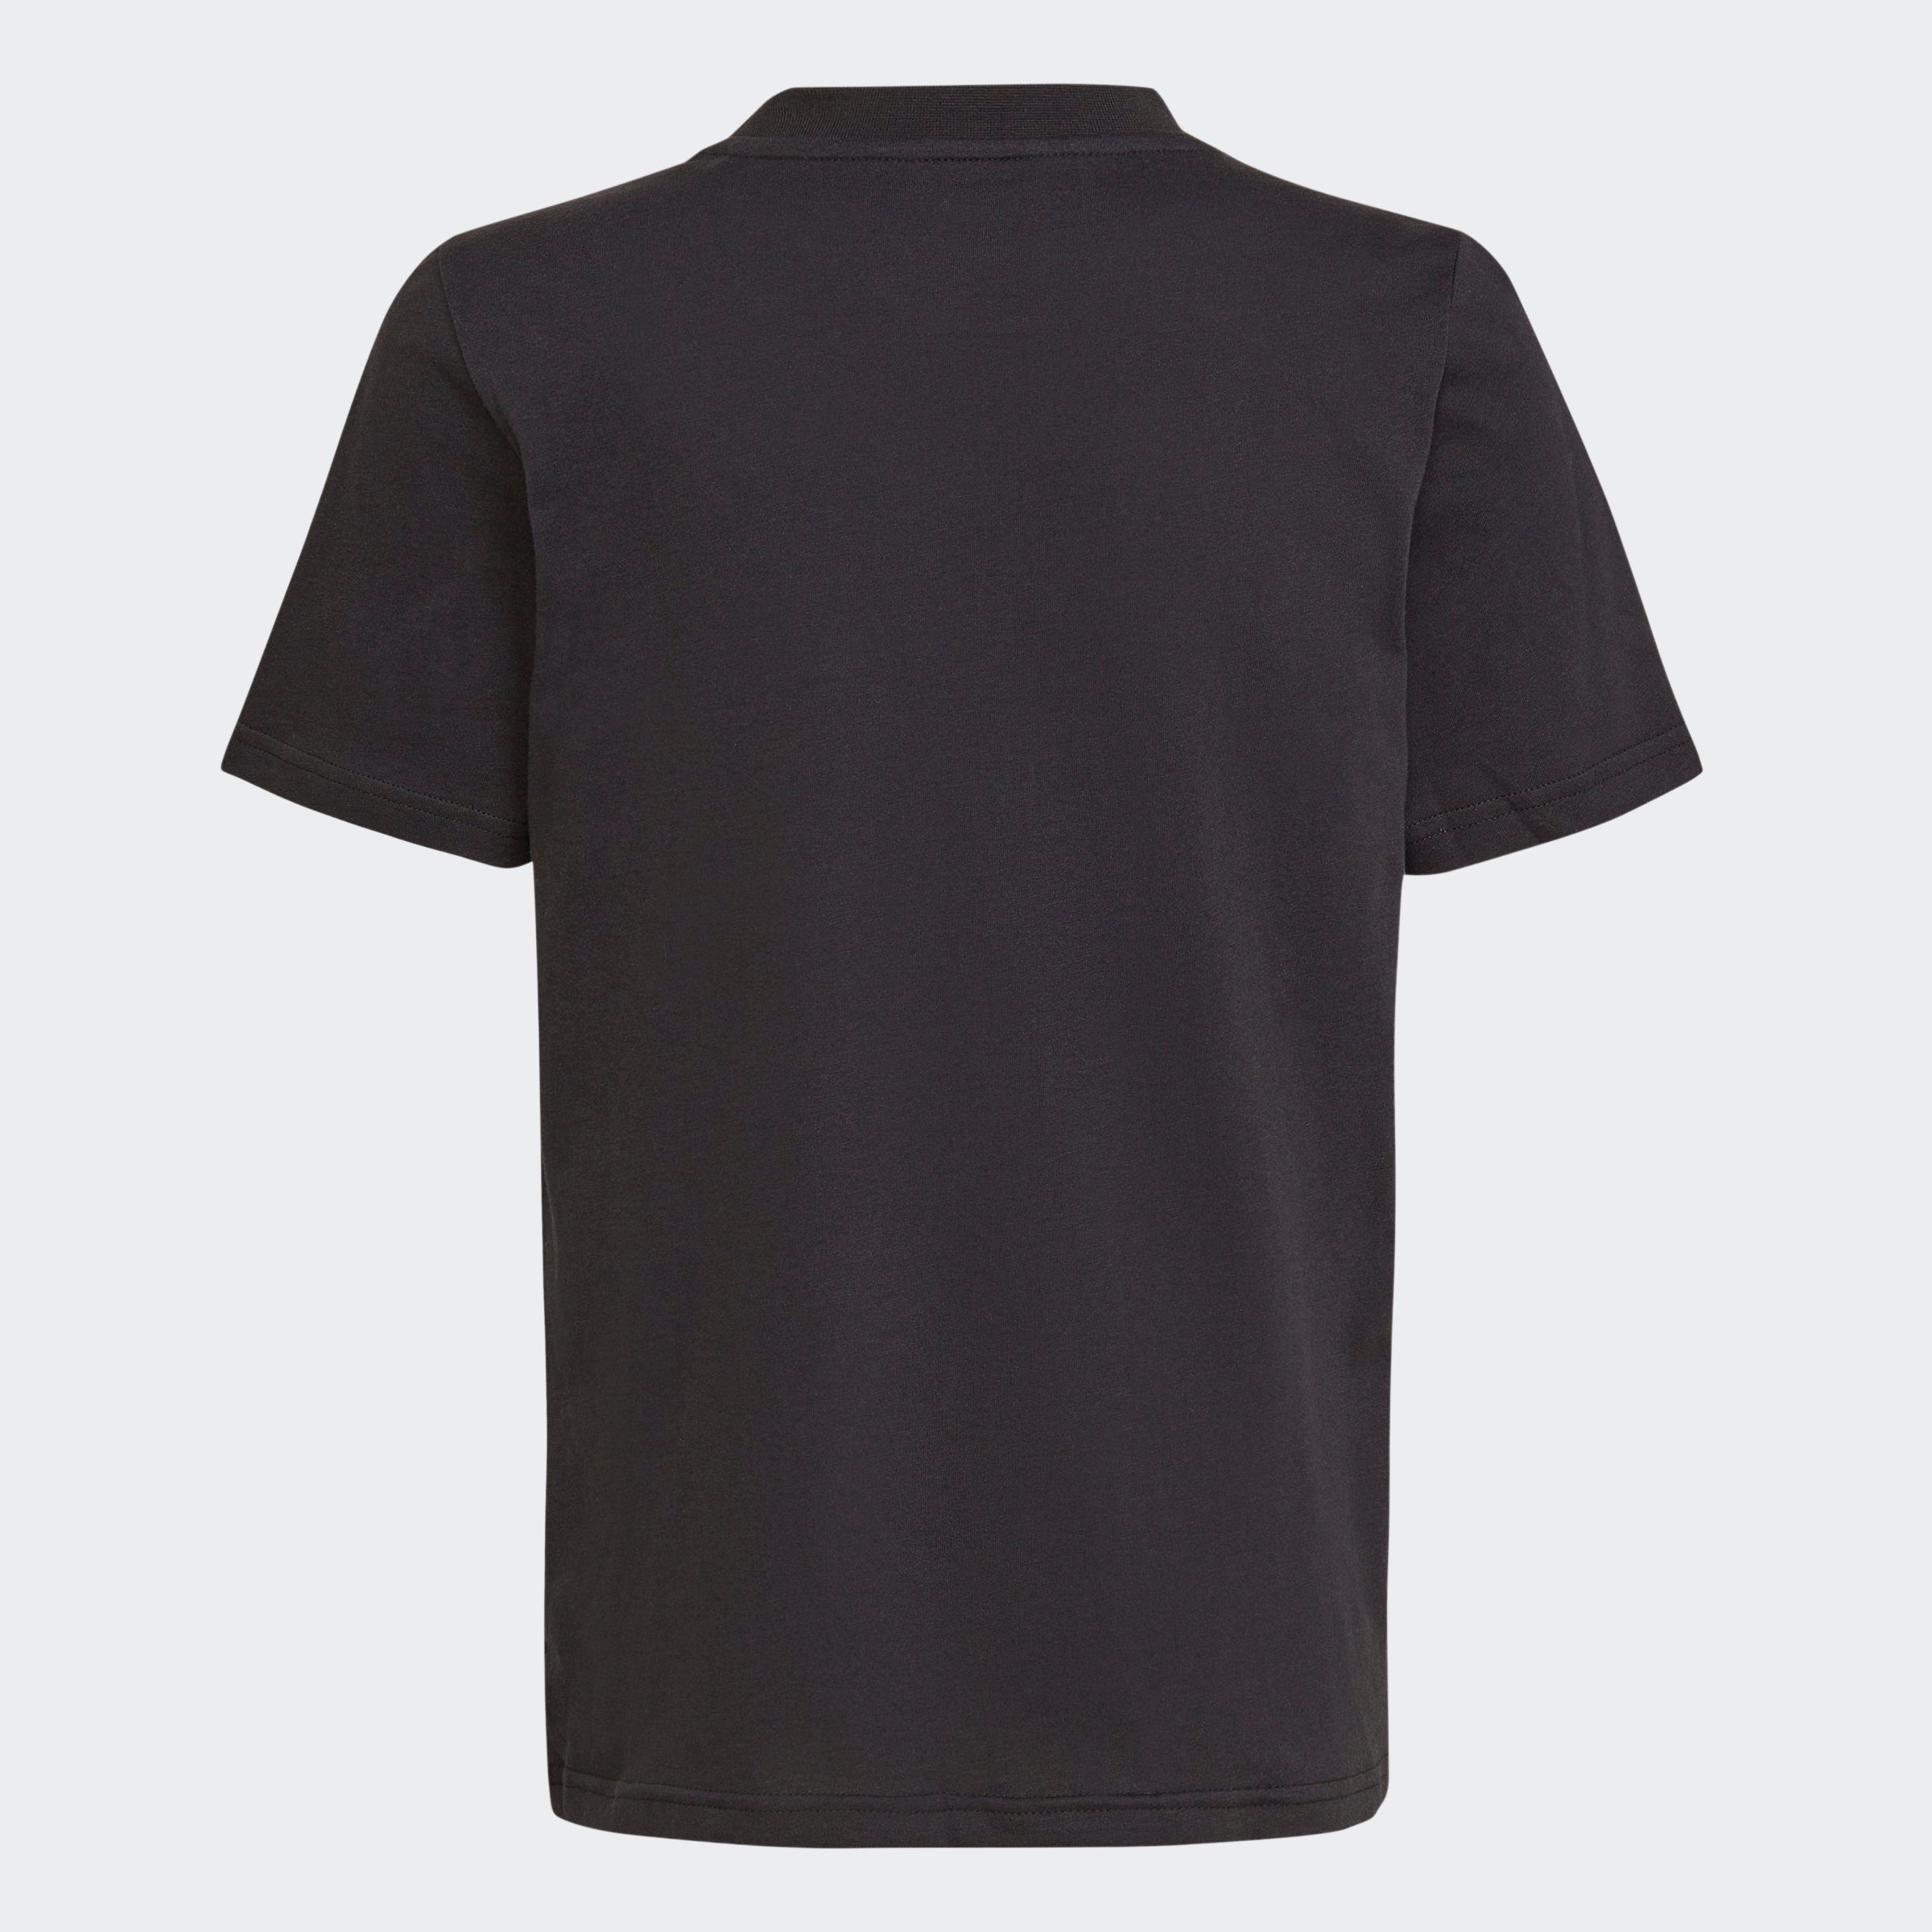 T-Shirt Originals adidas Black TEE